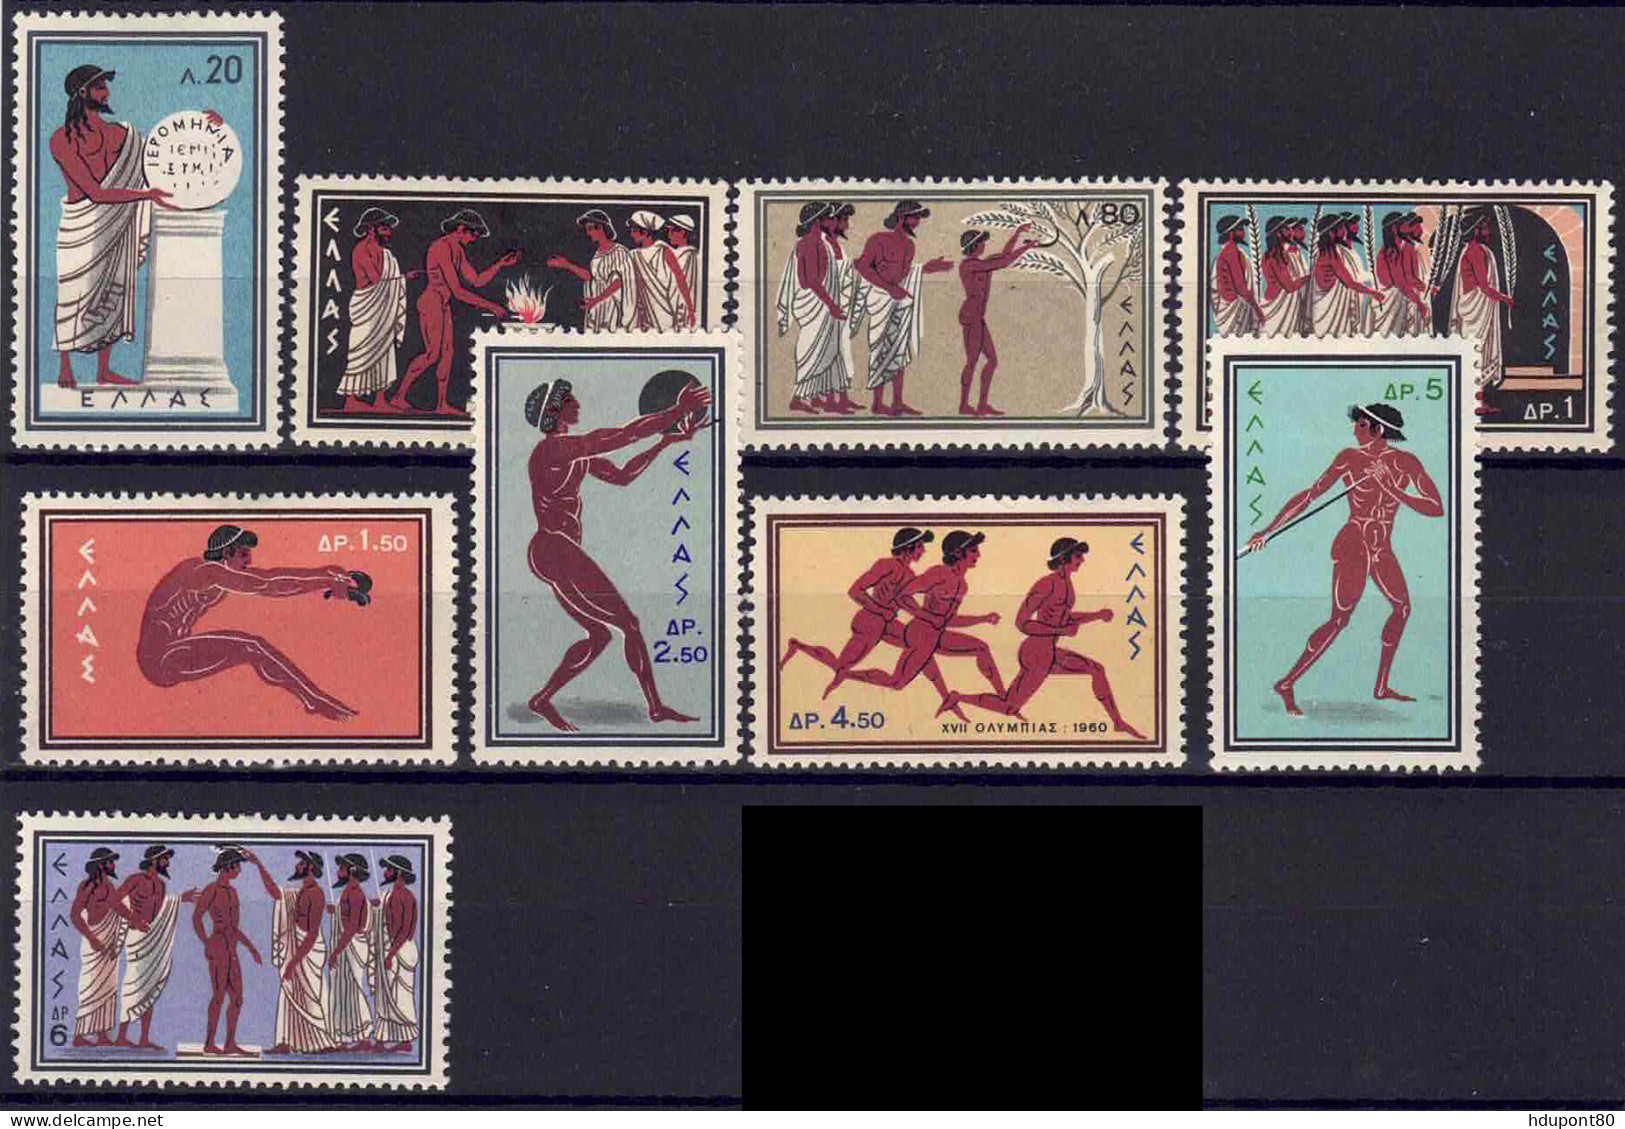 YT 713, 714, 716 à 722 - Unused Stamps